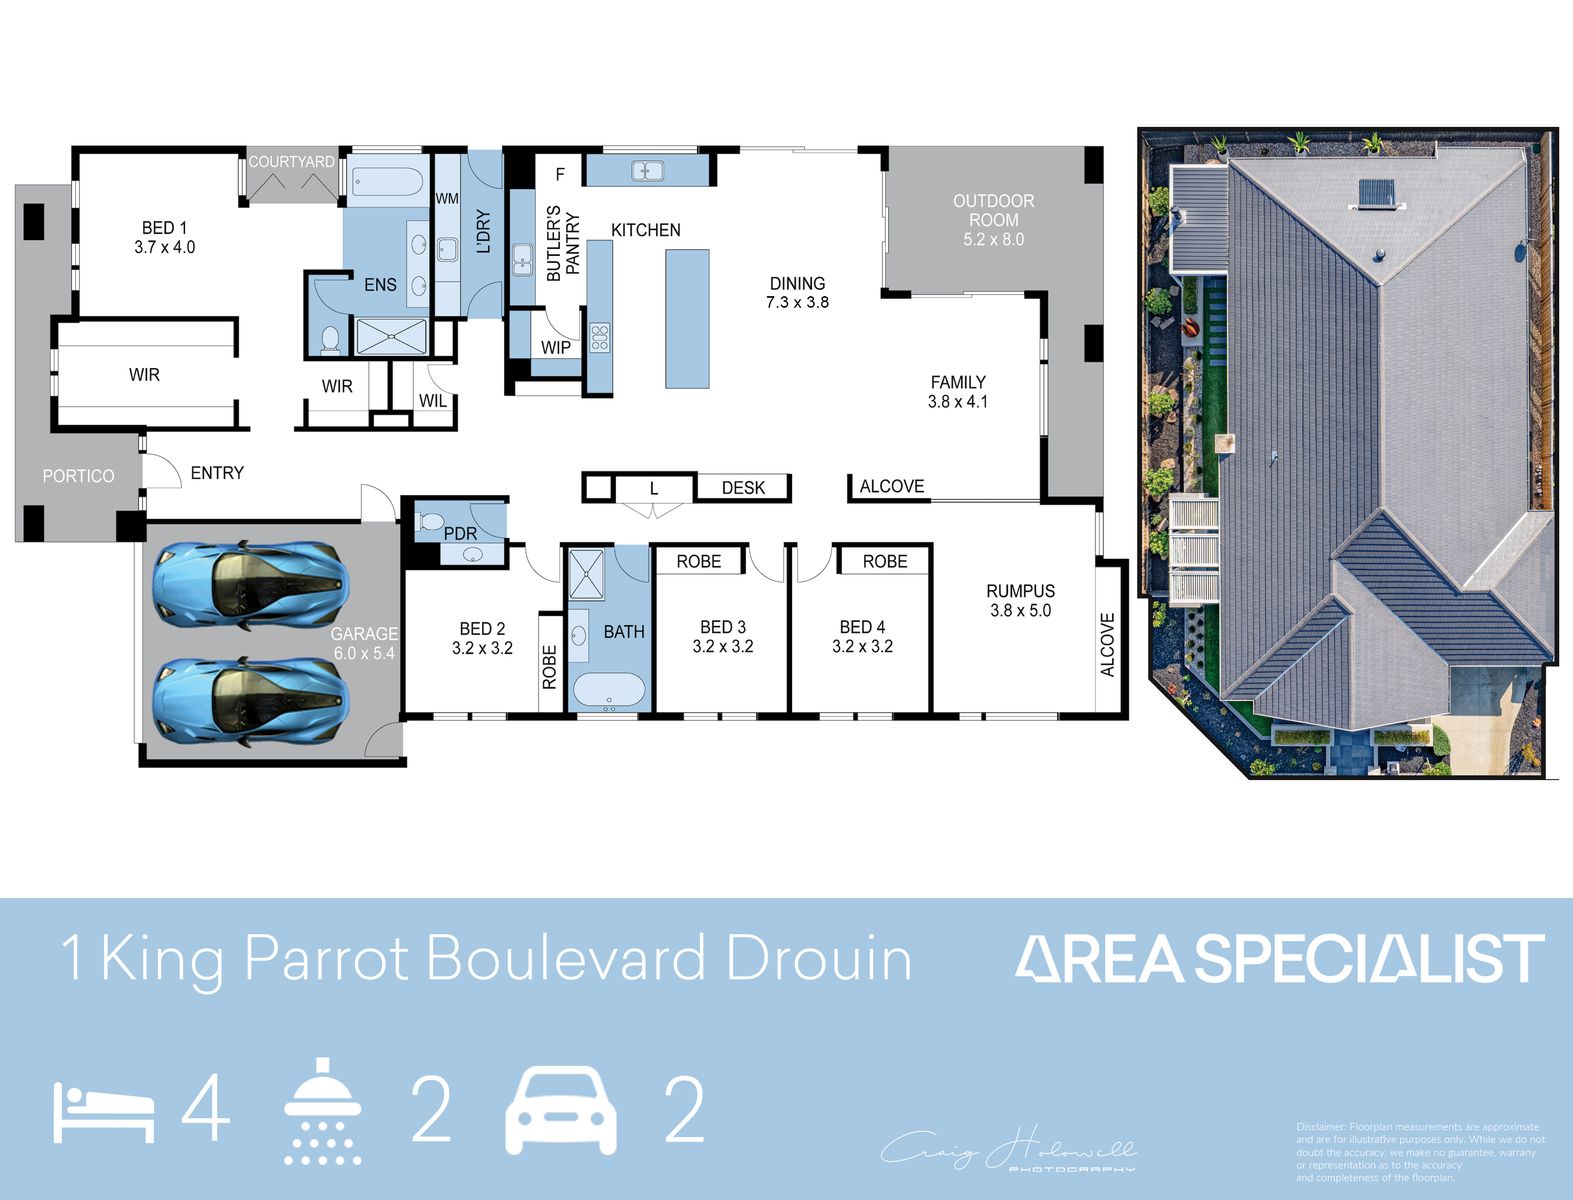 Area Specialist Floorplan